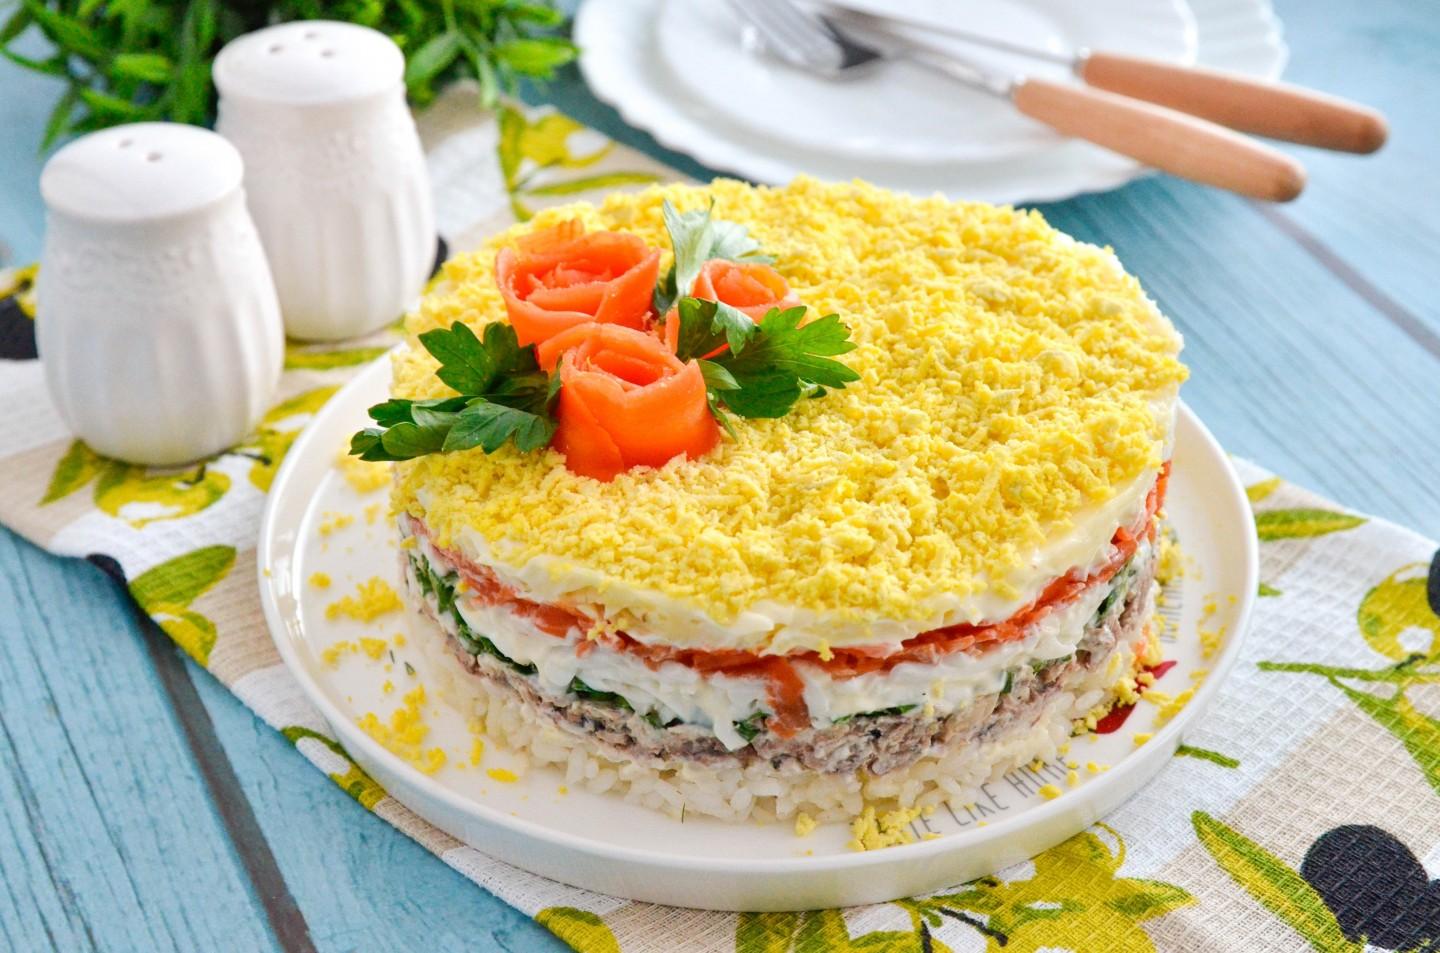 Bigpicture ru salat mimoza s konservami i risom 1625557567 13 max